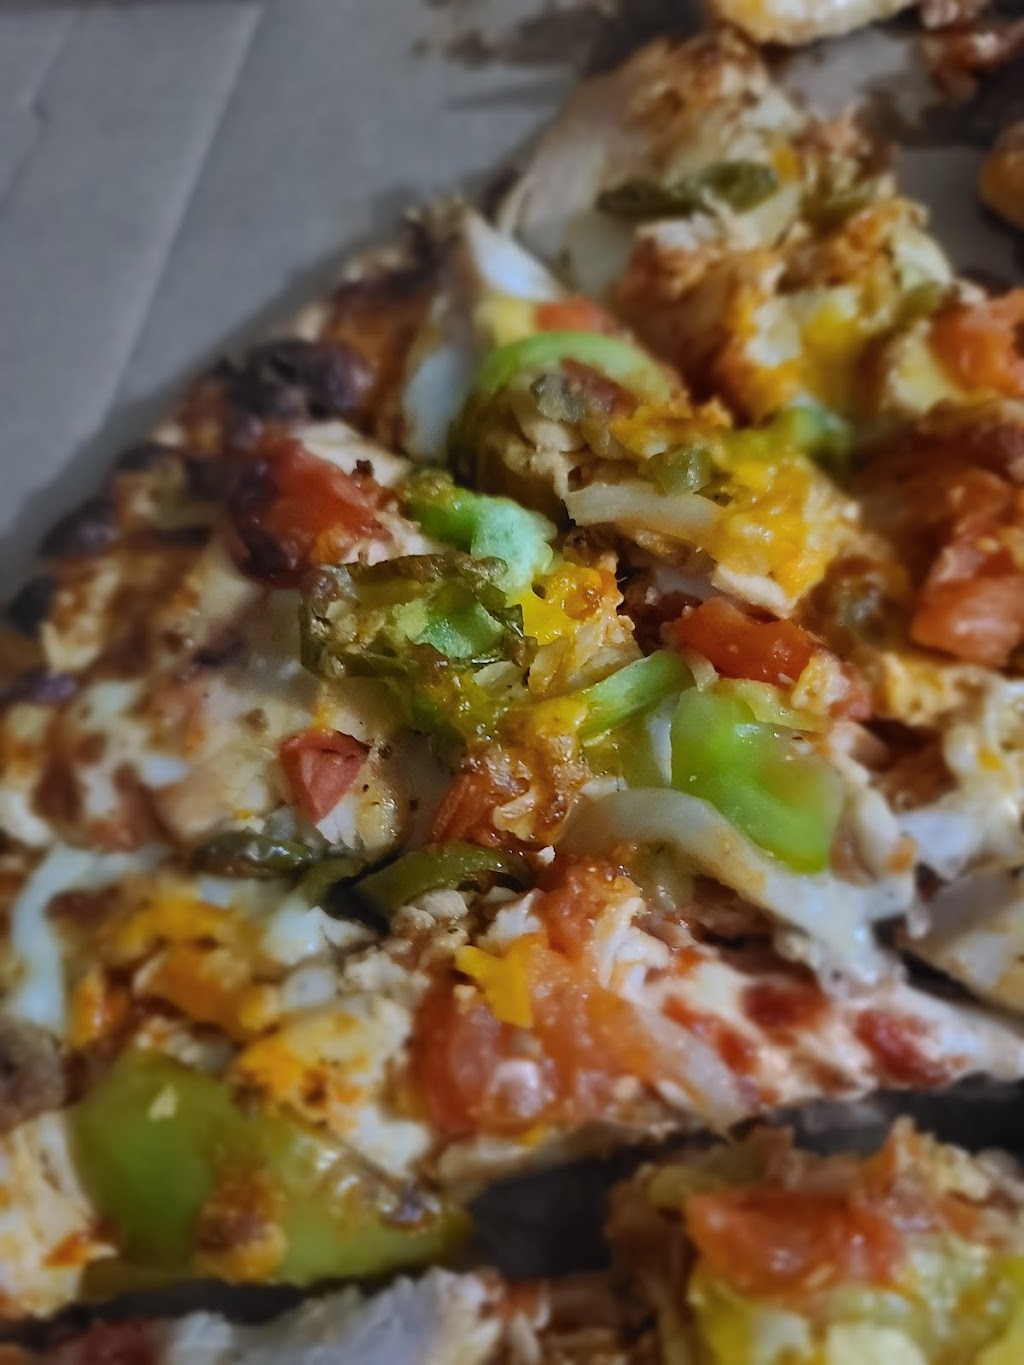 Dbonis Pizza | 2249 Jackson Ave, Escalon, CA 95320, USA | Phone: (209) 838-1700